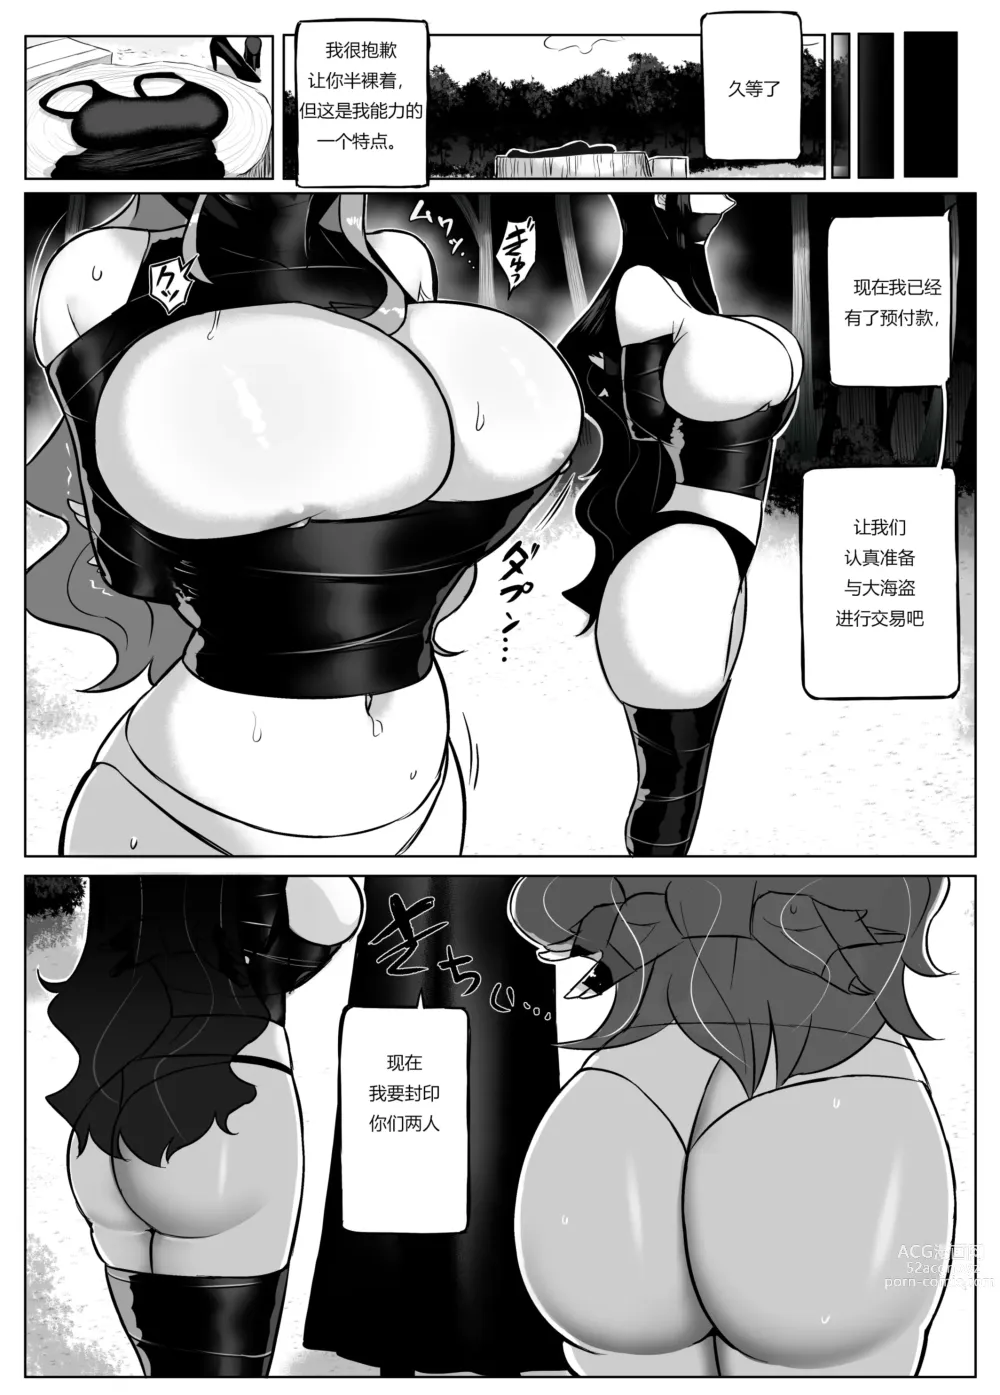 Page 12 of manga Trade